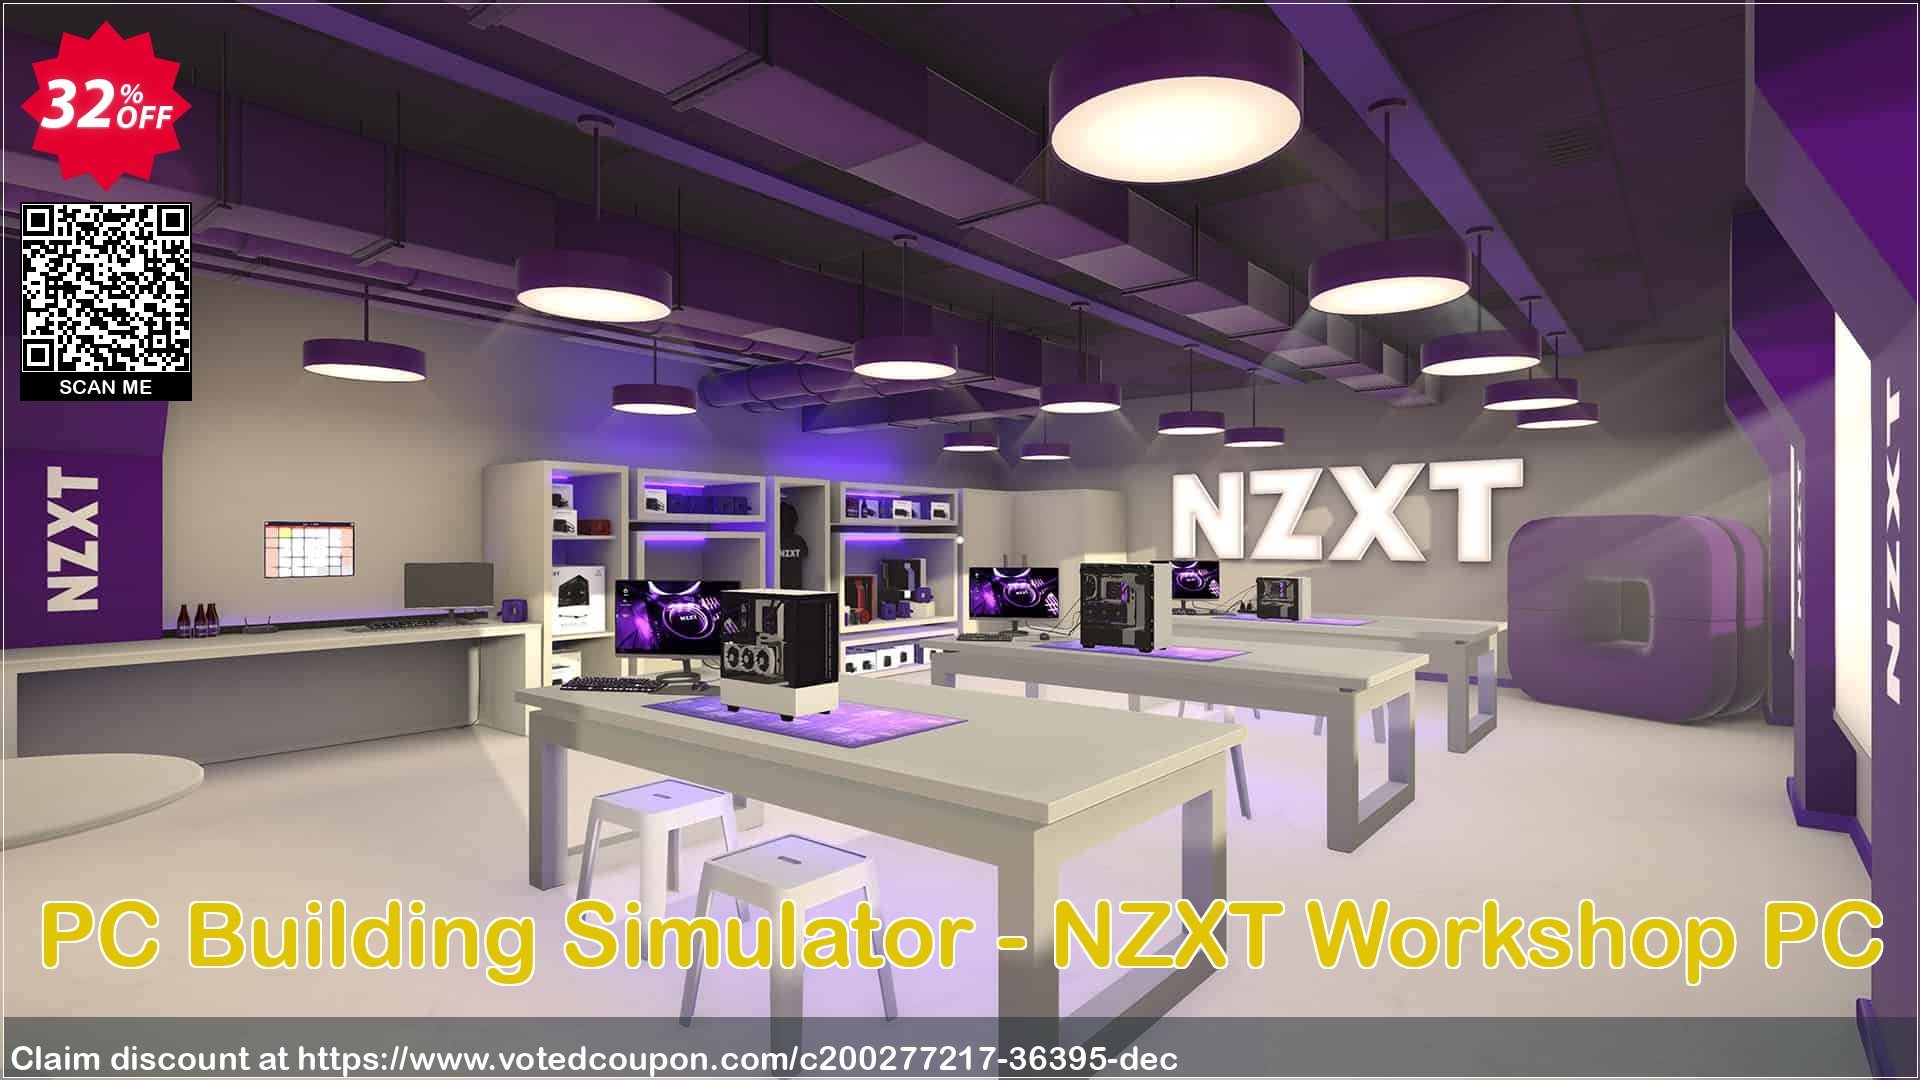 PC Building Simulator - NZXT Workshop PC Coupon Code Apr 2024, 32% OFF - VotedCoupon